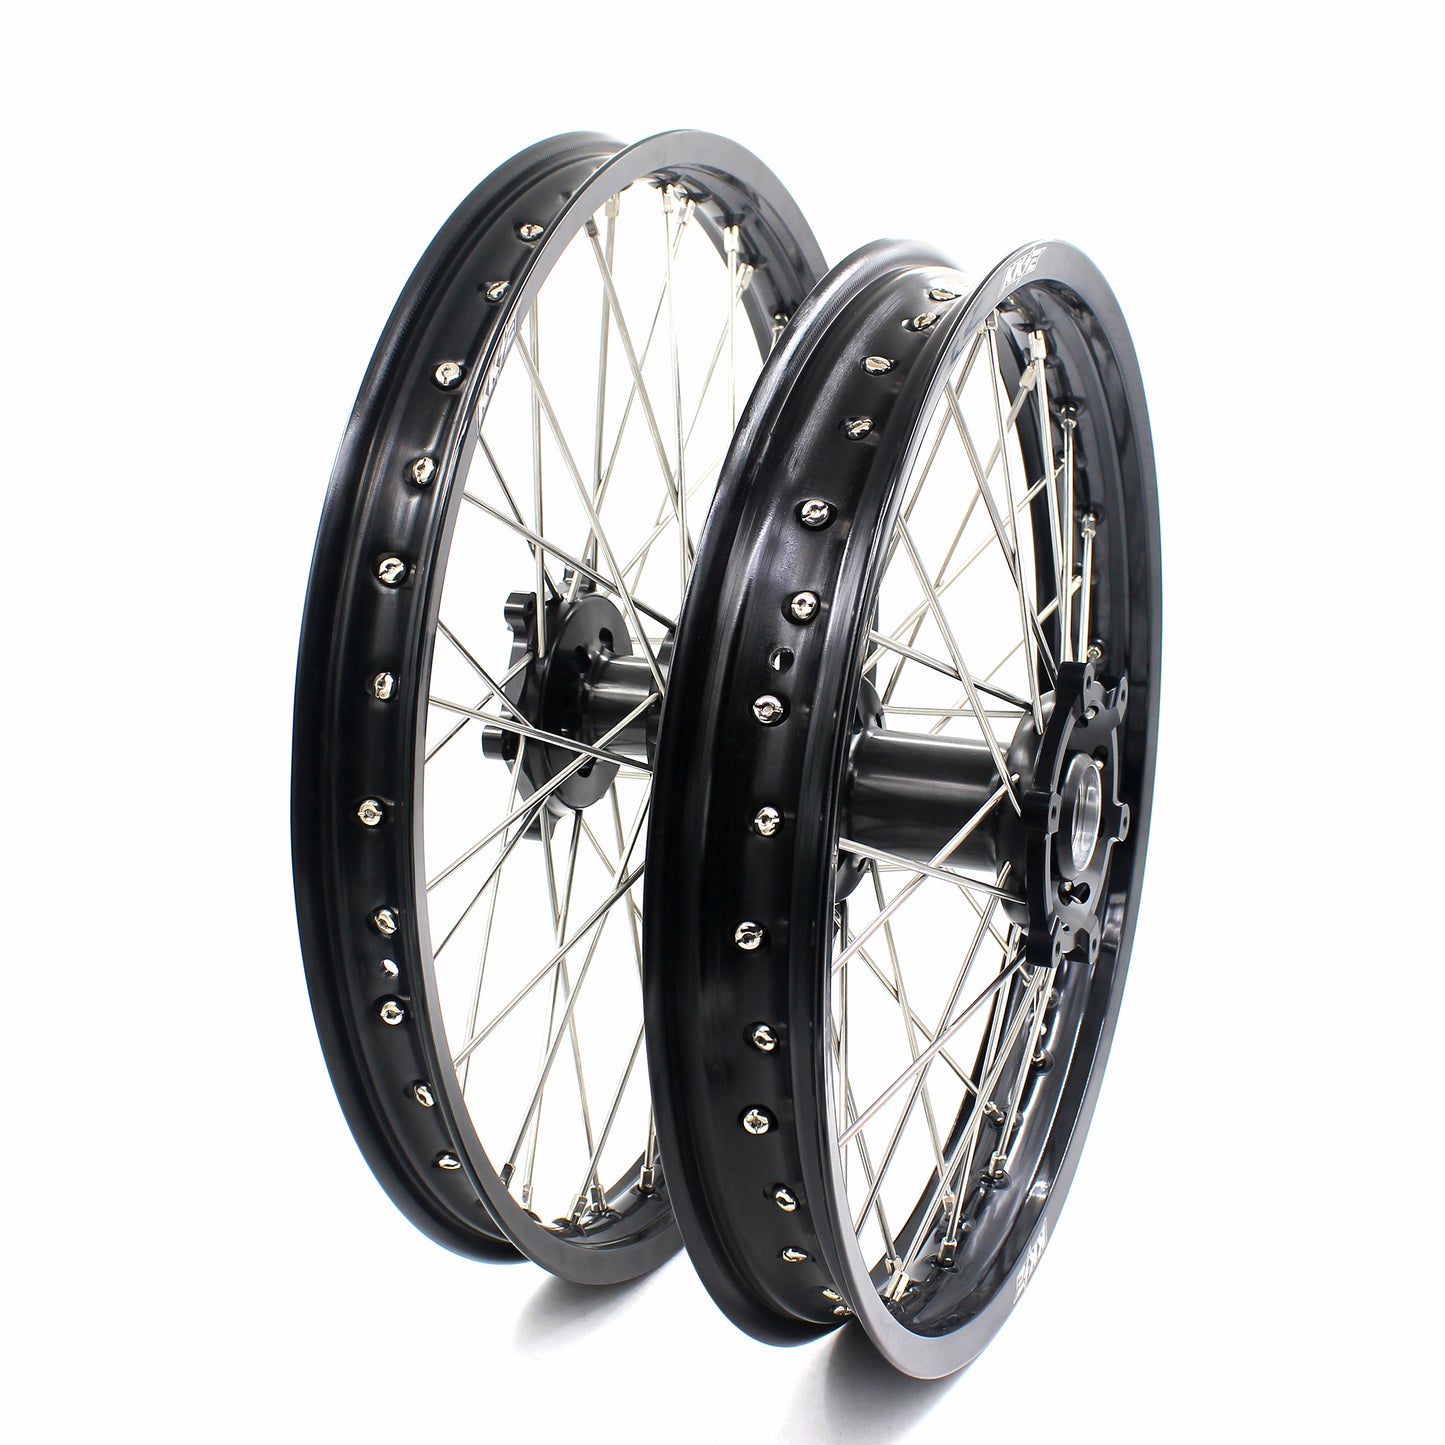 KKE Dirtbike 1.6*21" & 2.15*18" Wheels Rims for SUZUKI RM250 2001